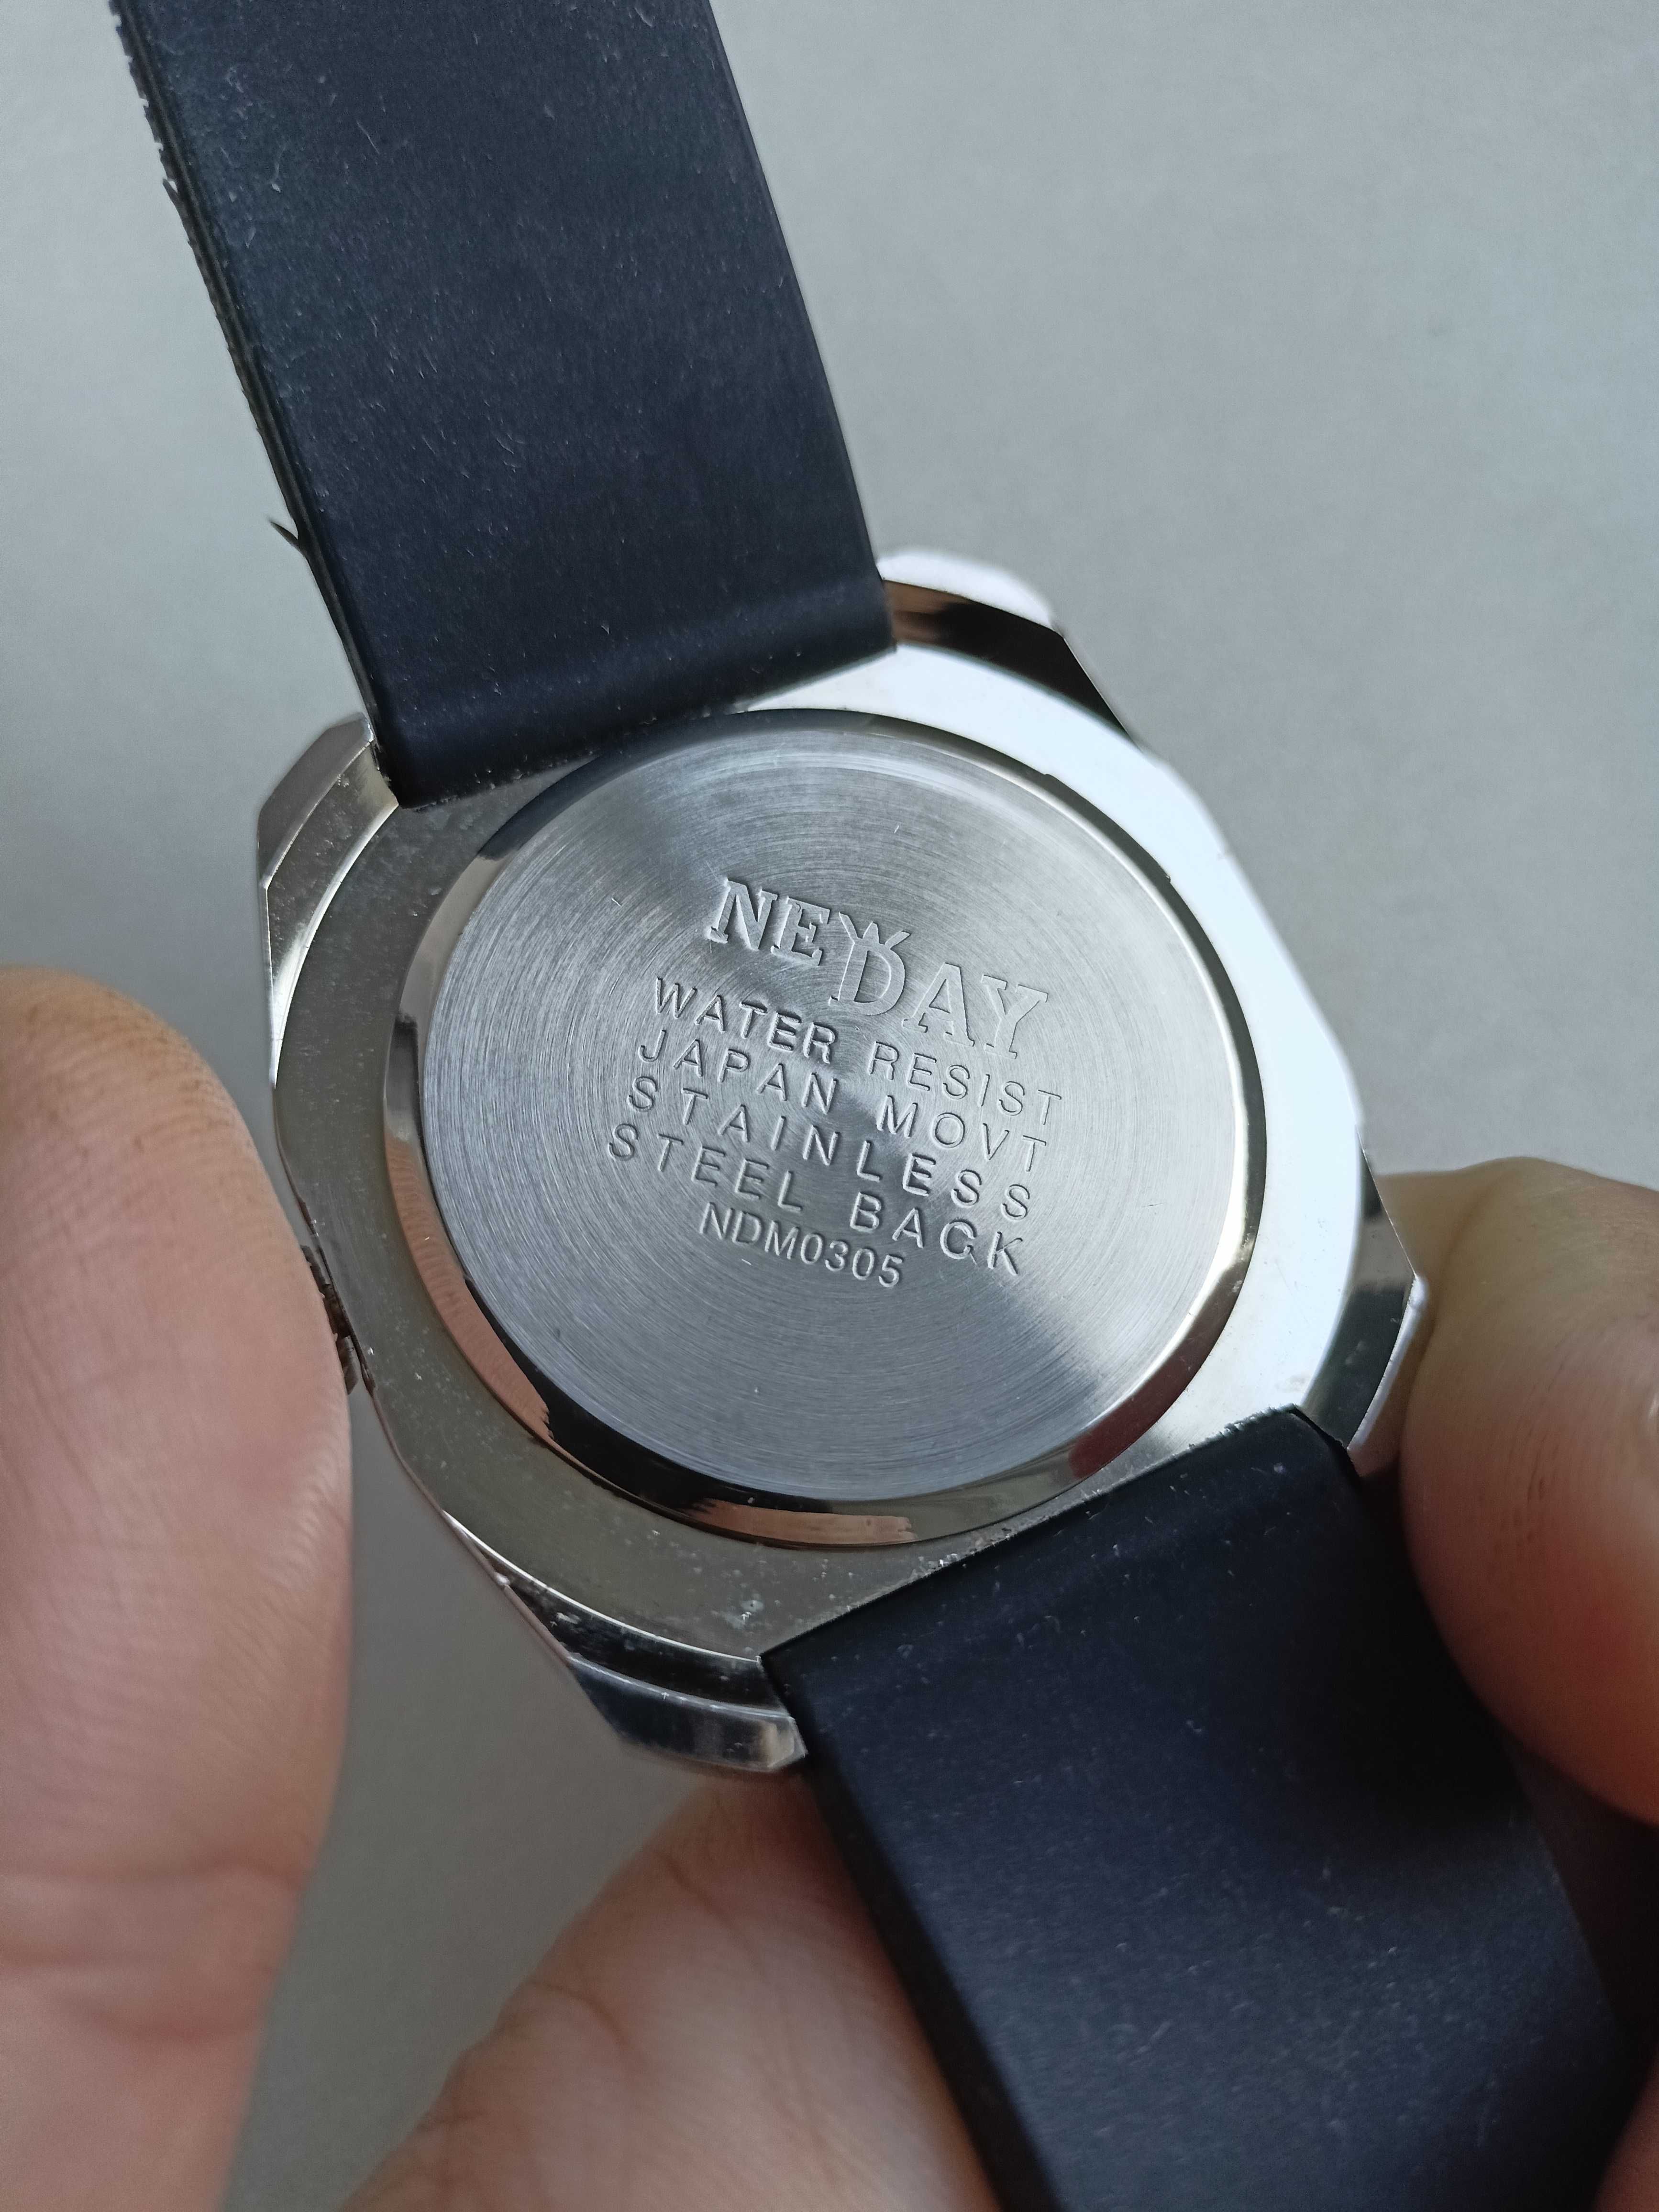 Мужские часы NewDay. Новые.